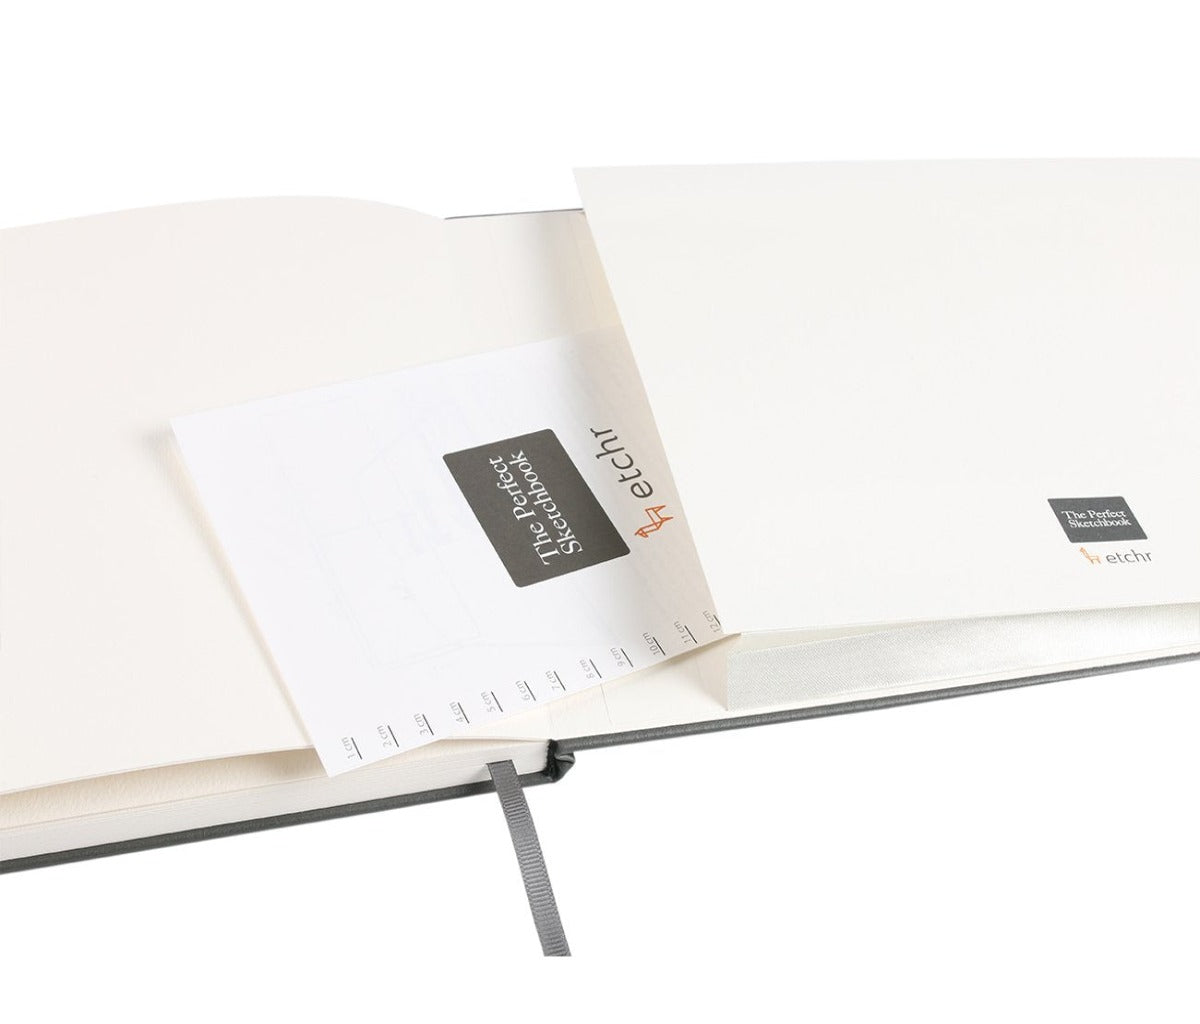 Etchr Mixed Media Hardbound Sketchbook - A6, 4.1 x 5.8, Hot